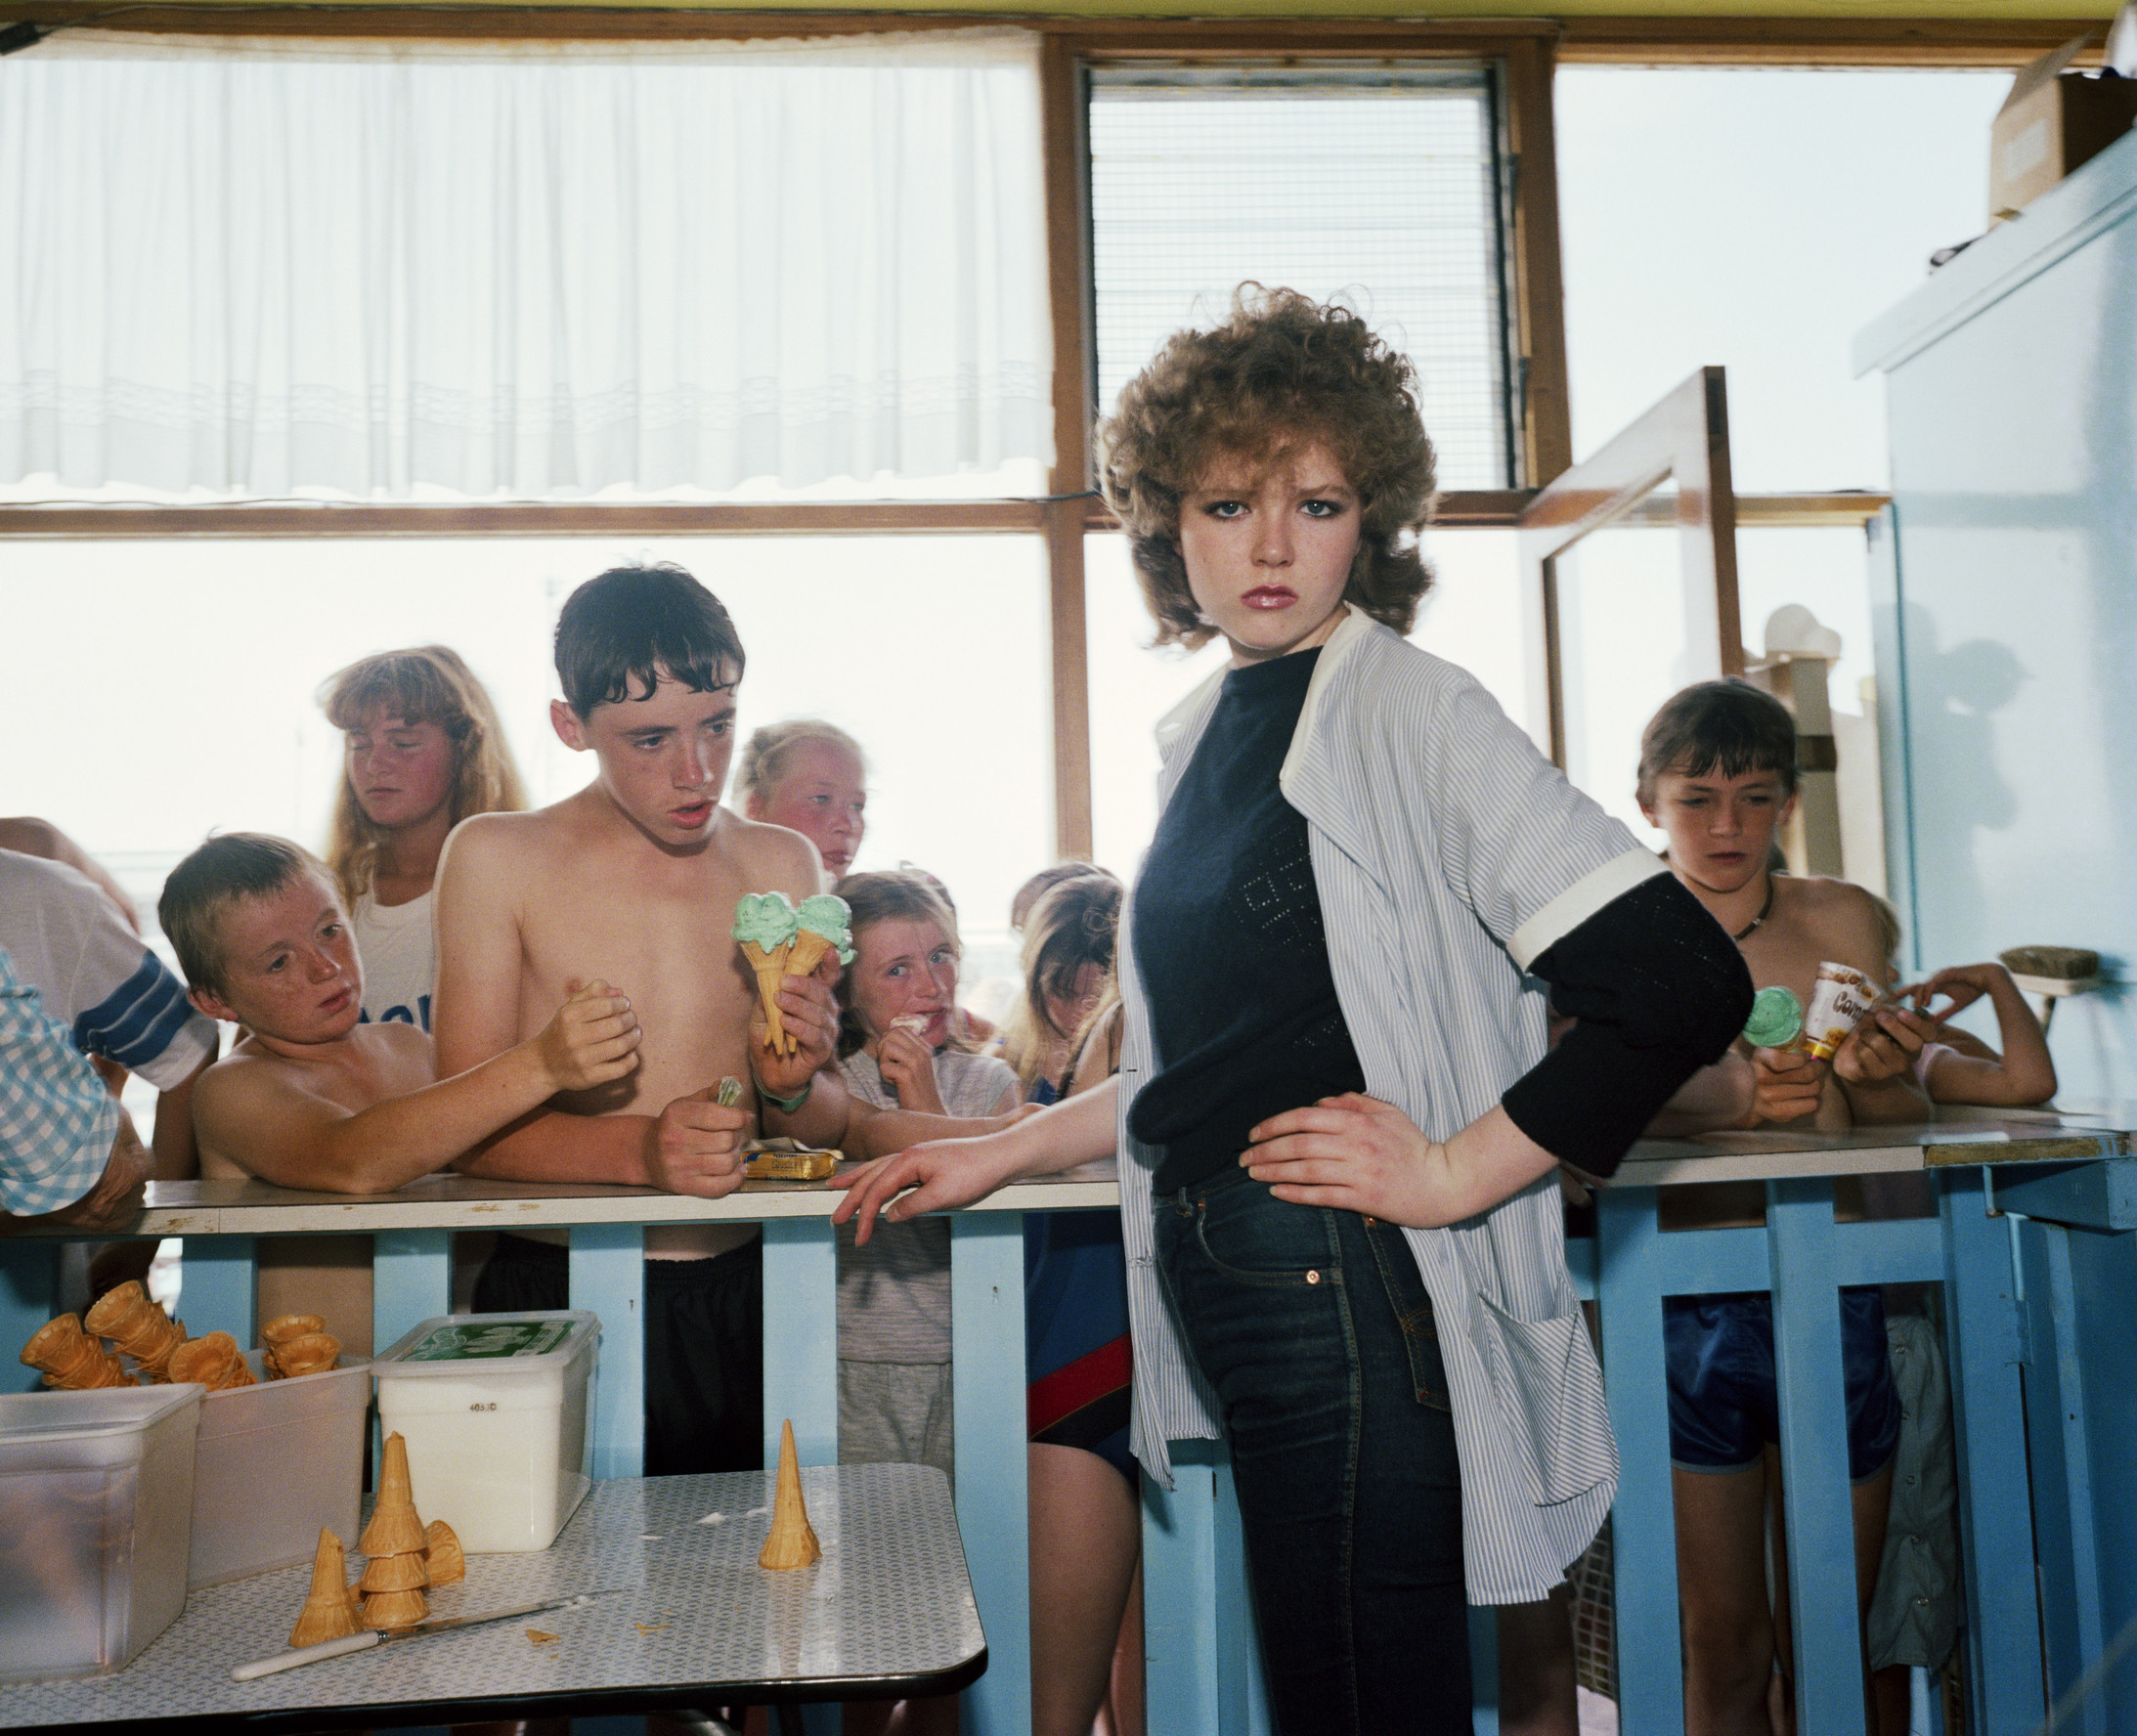 New Brighton, England, from 'The Last Resort', 1983-85, © Martin Parr / Magnum Photos